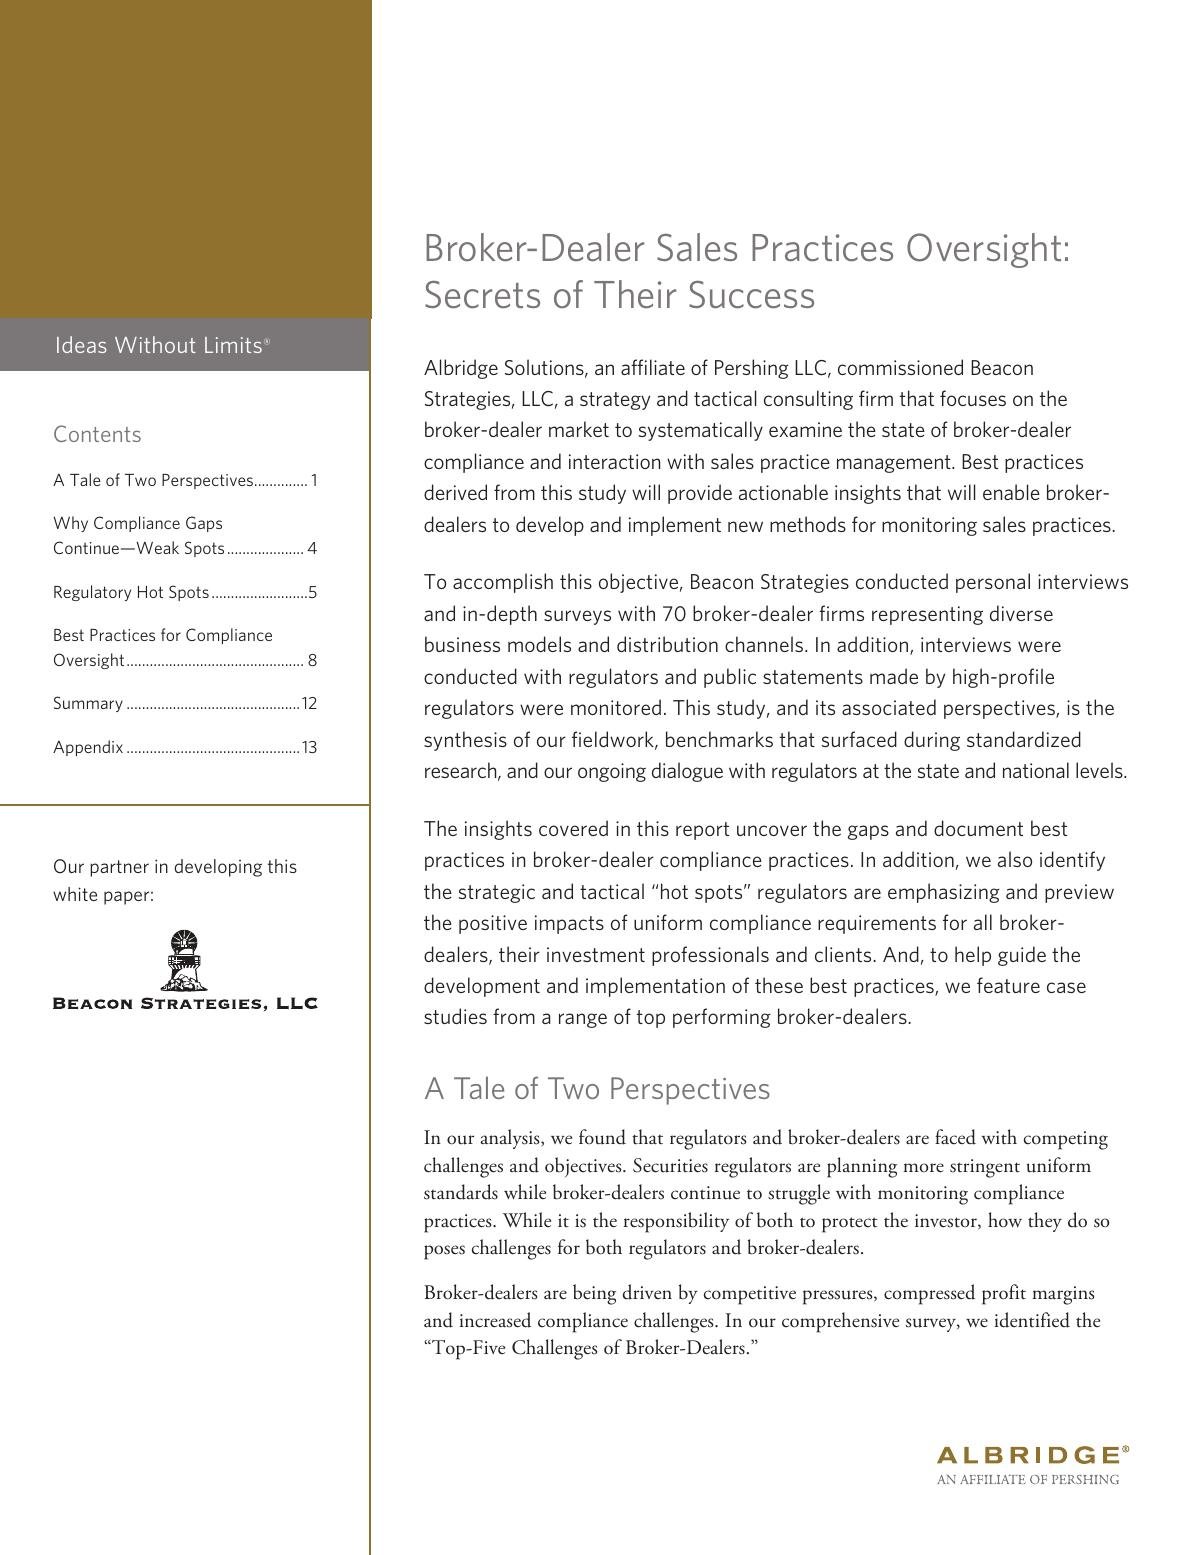 Broker-Dealer Sales Practices Oversight: The Secrets Of Their Success